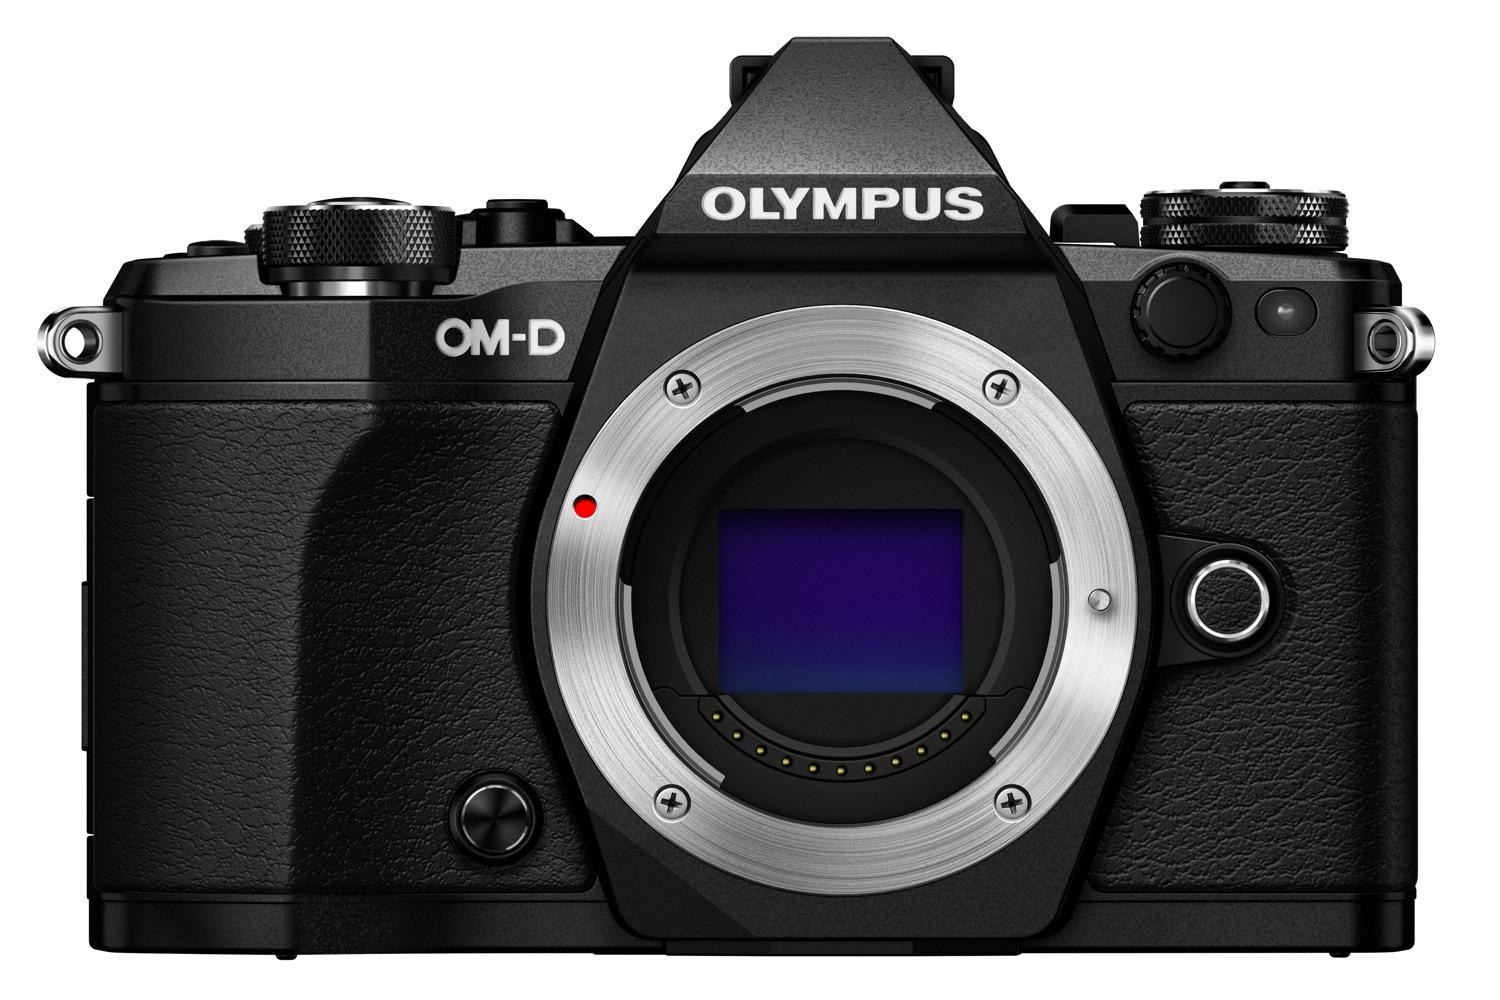 olympus e m5 mark ii puts focus movie stabilization 40 megapixel photos m5markii blk front